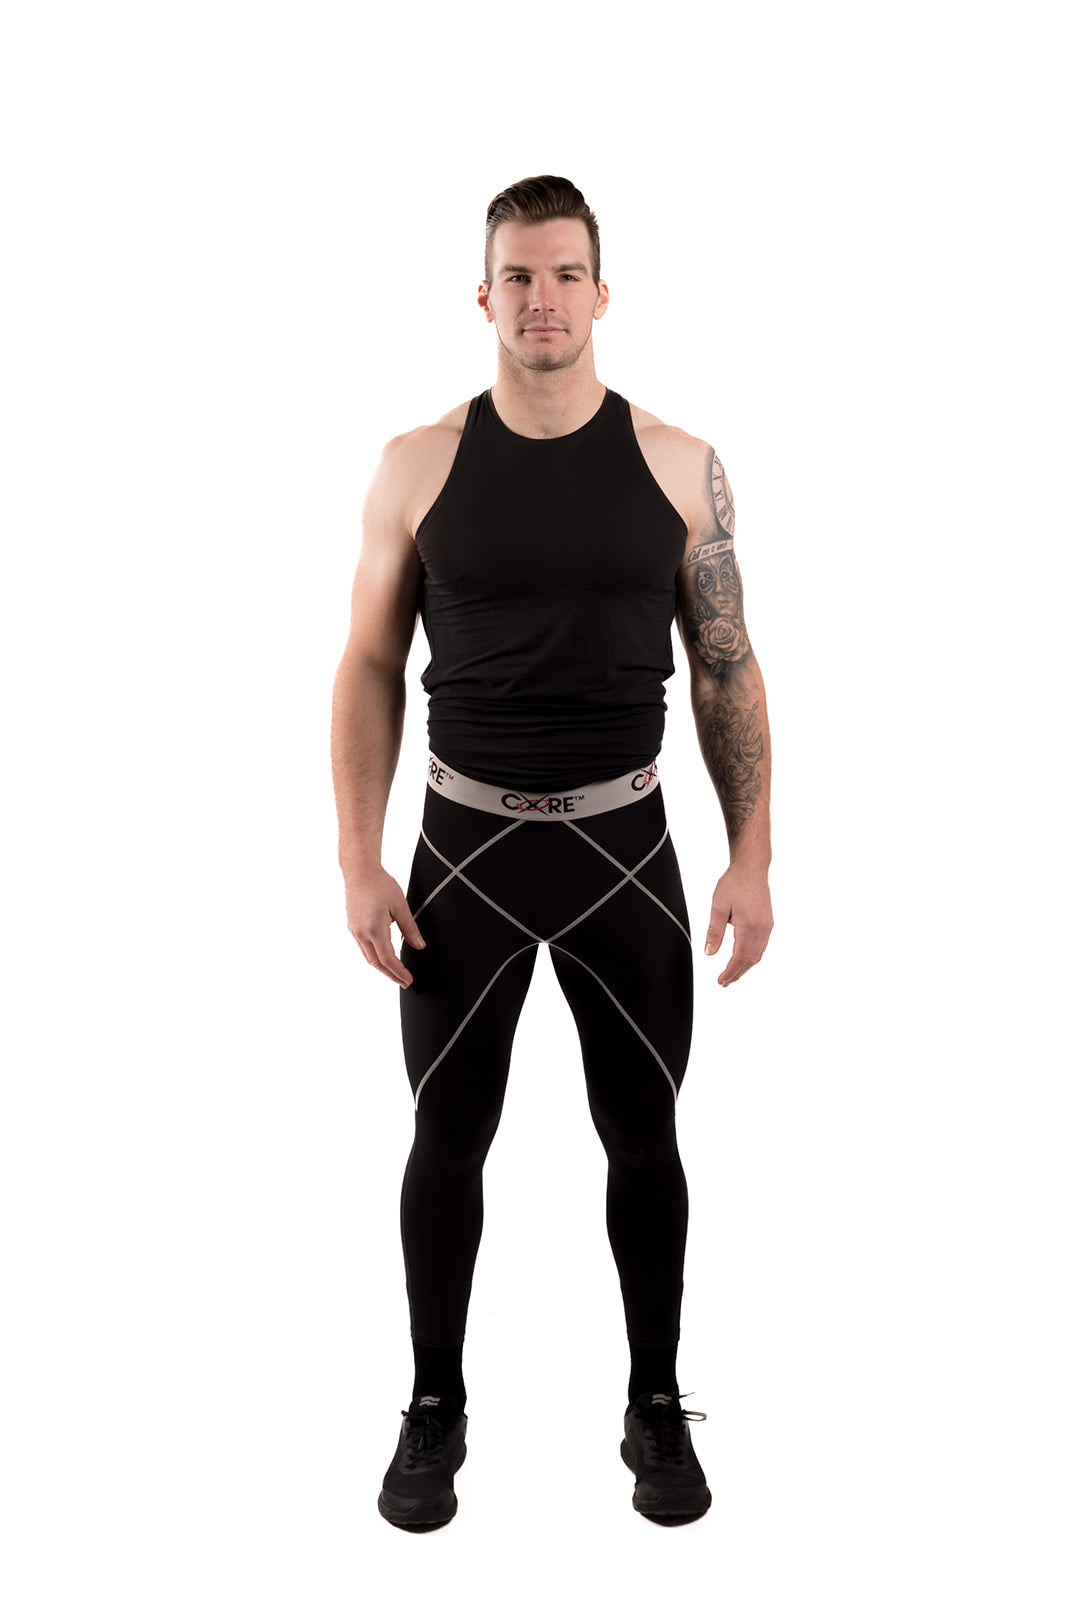 CW-X Insulator Pro Tights - Men's - Clothing